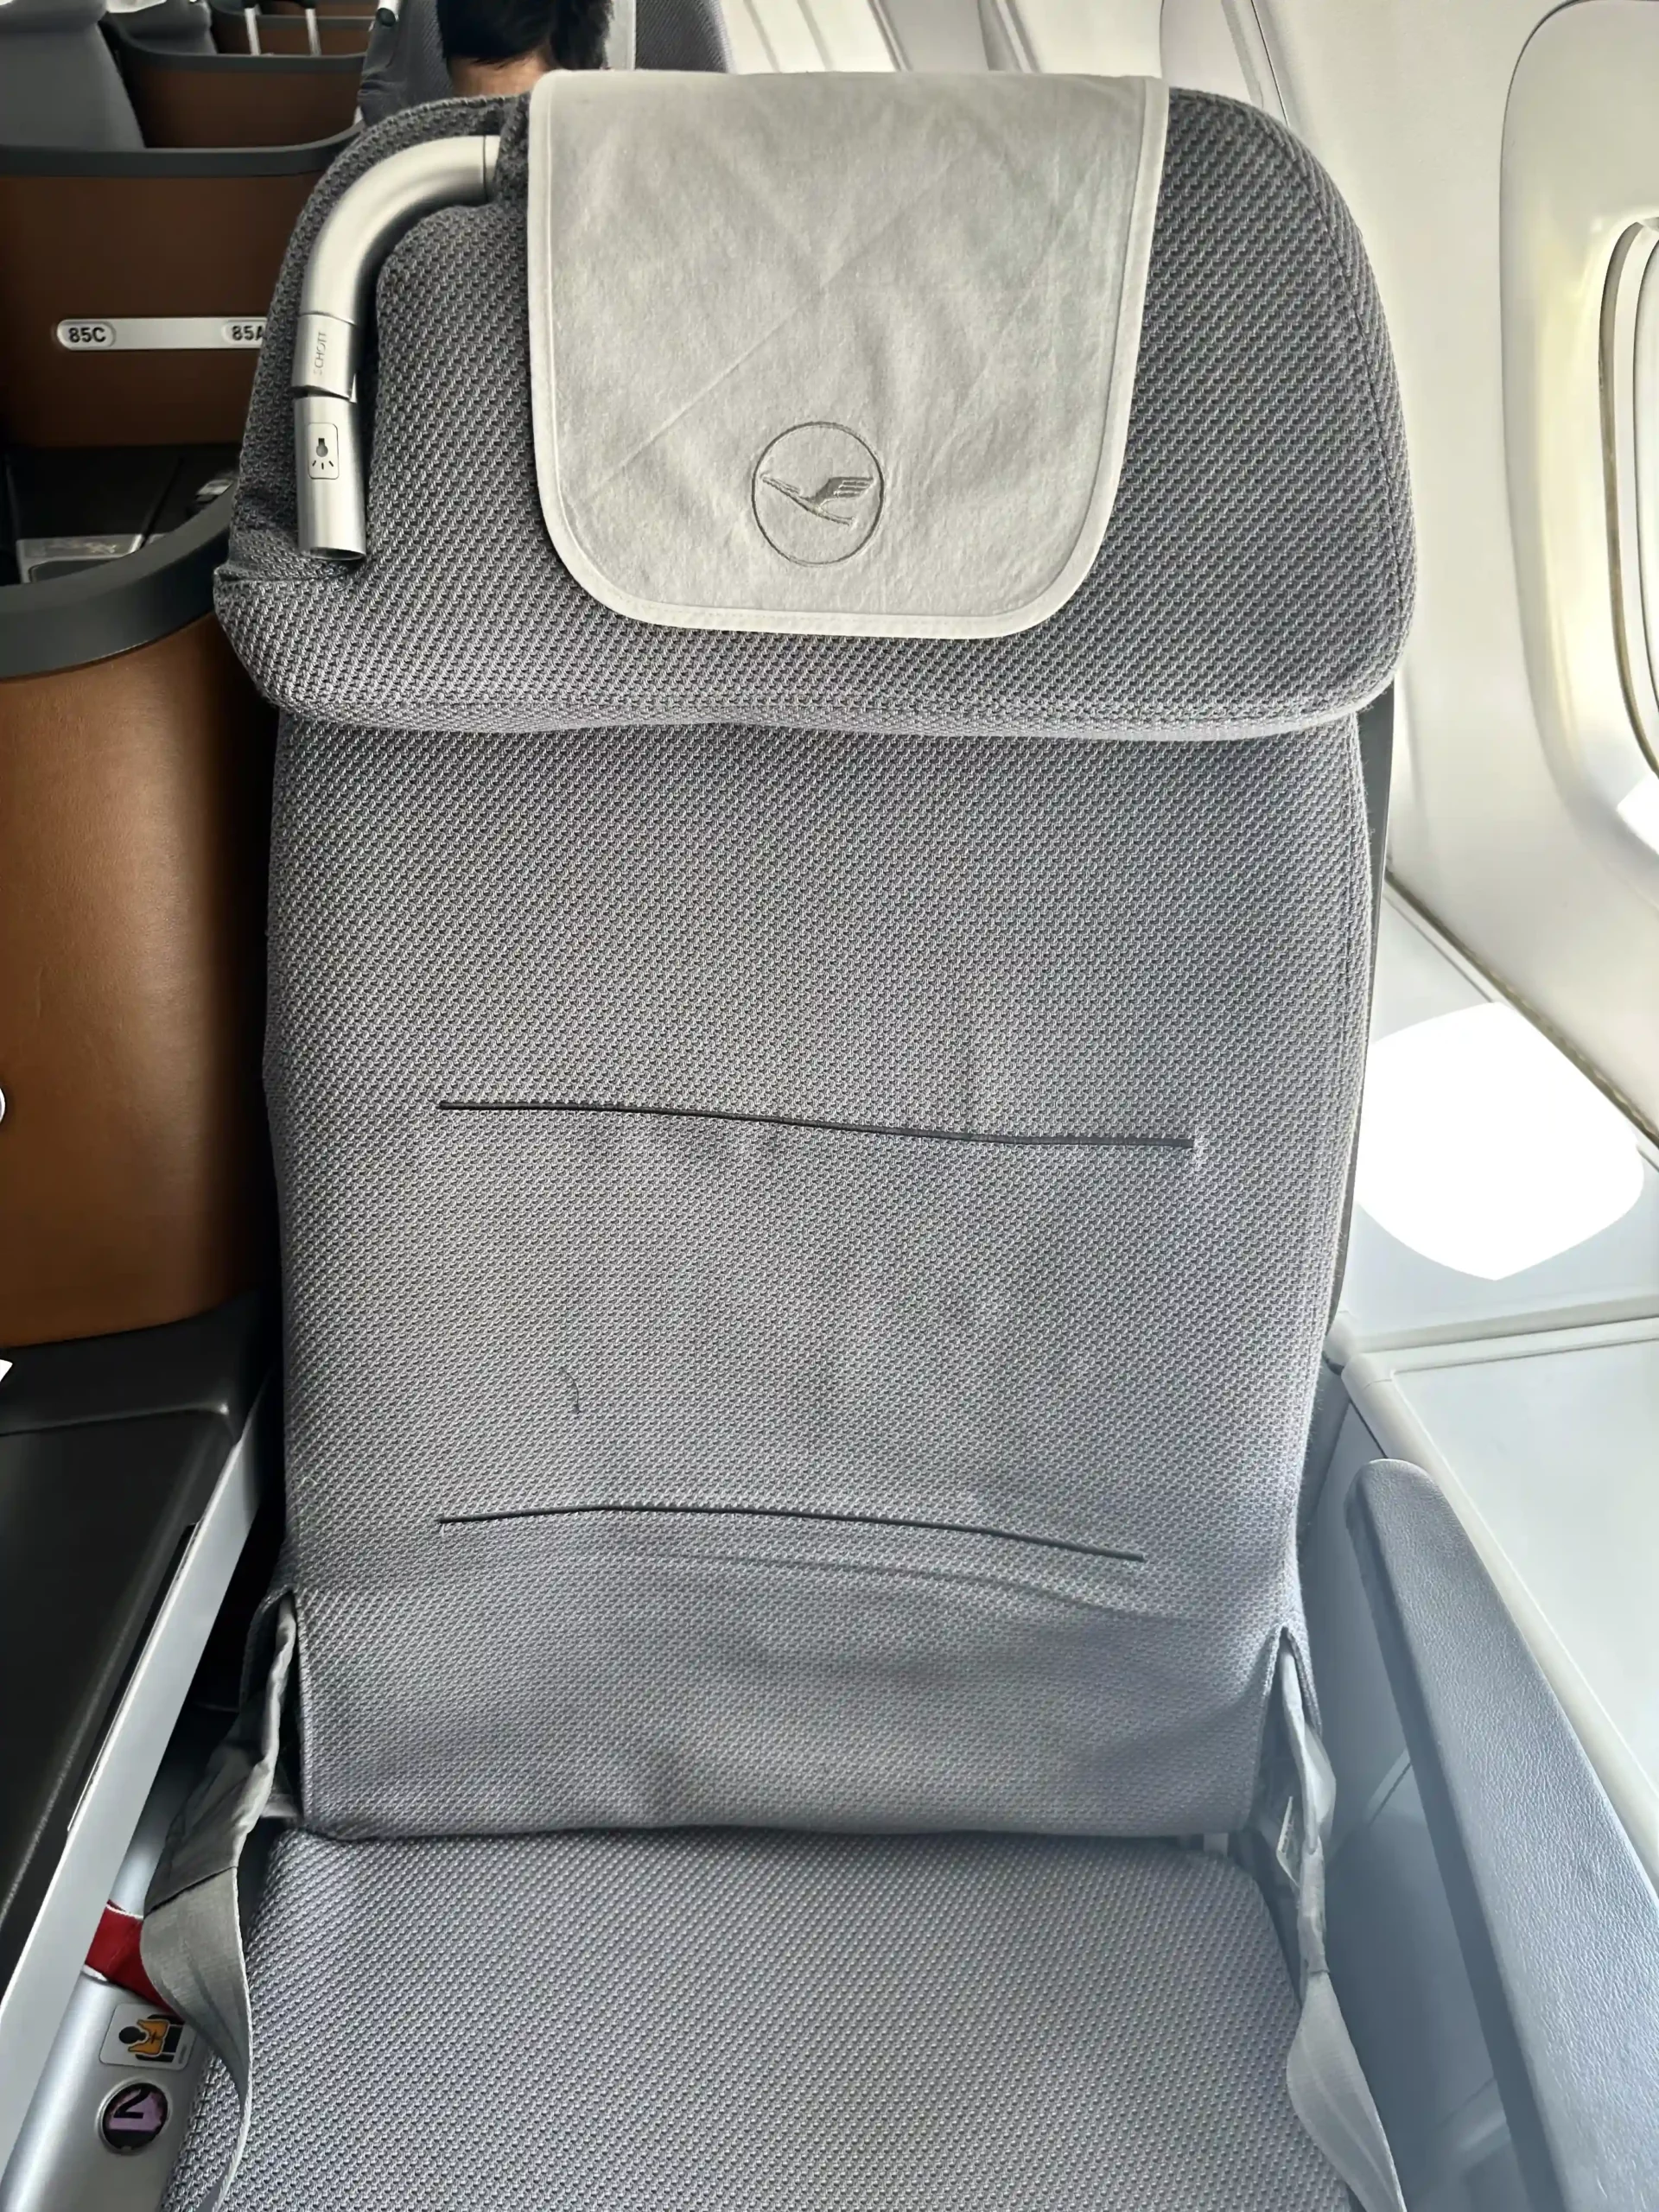 a seat cushion on a plane